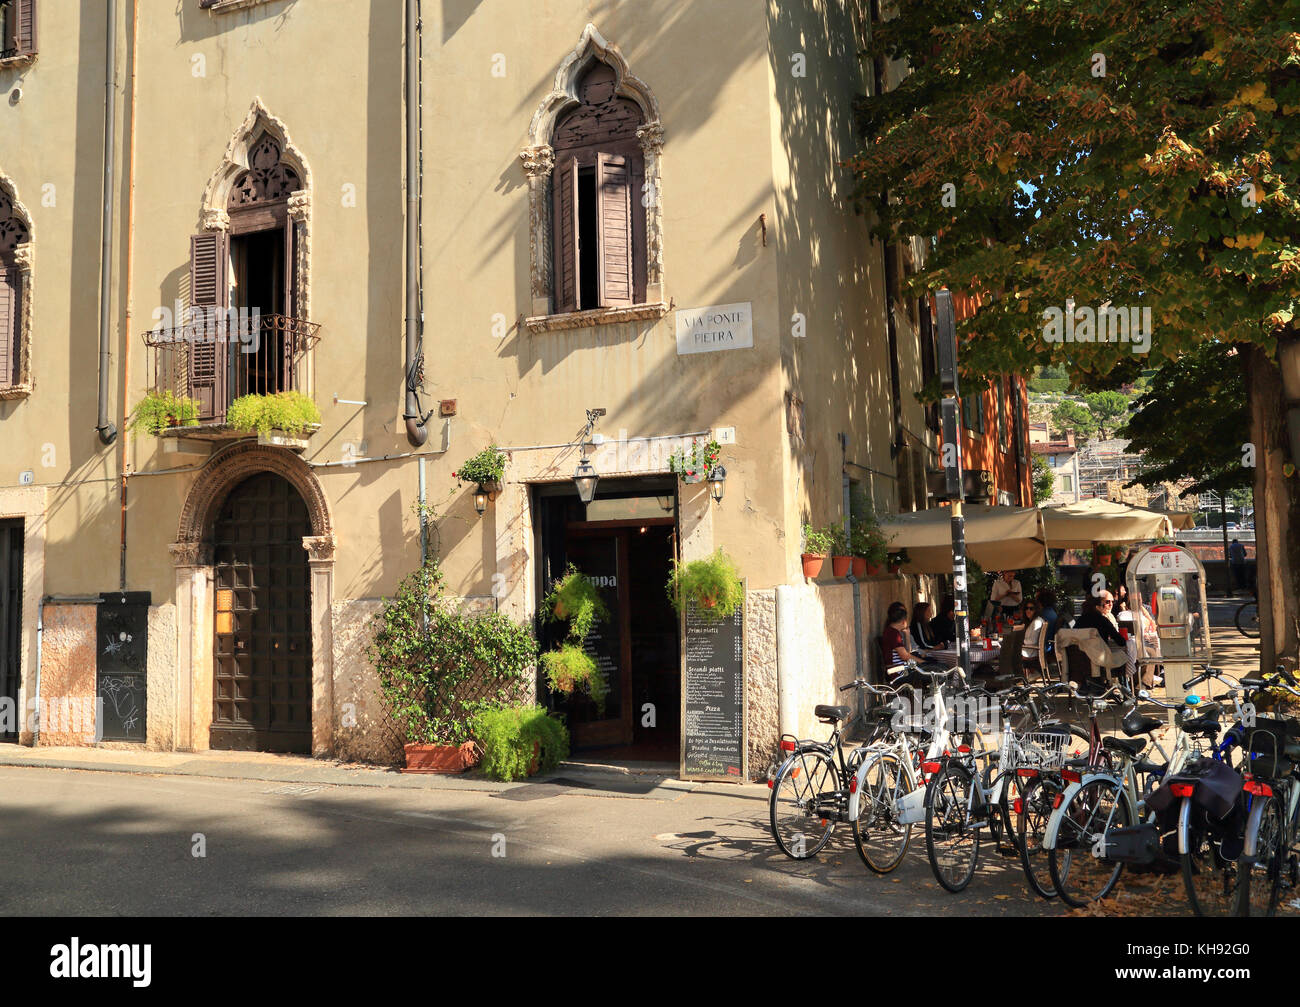 Cappa Café, Verona Stock Photo